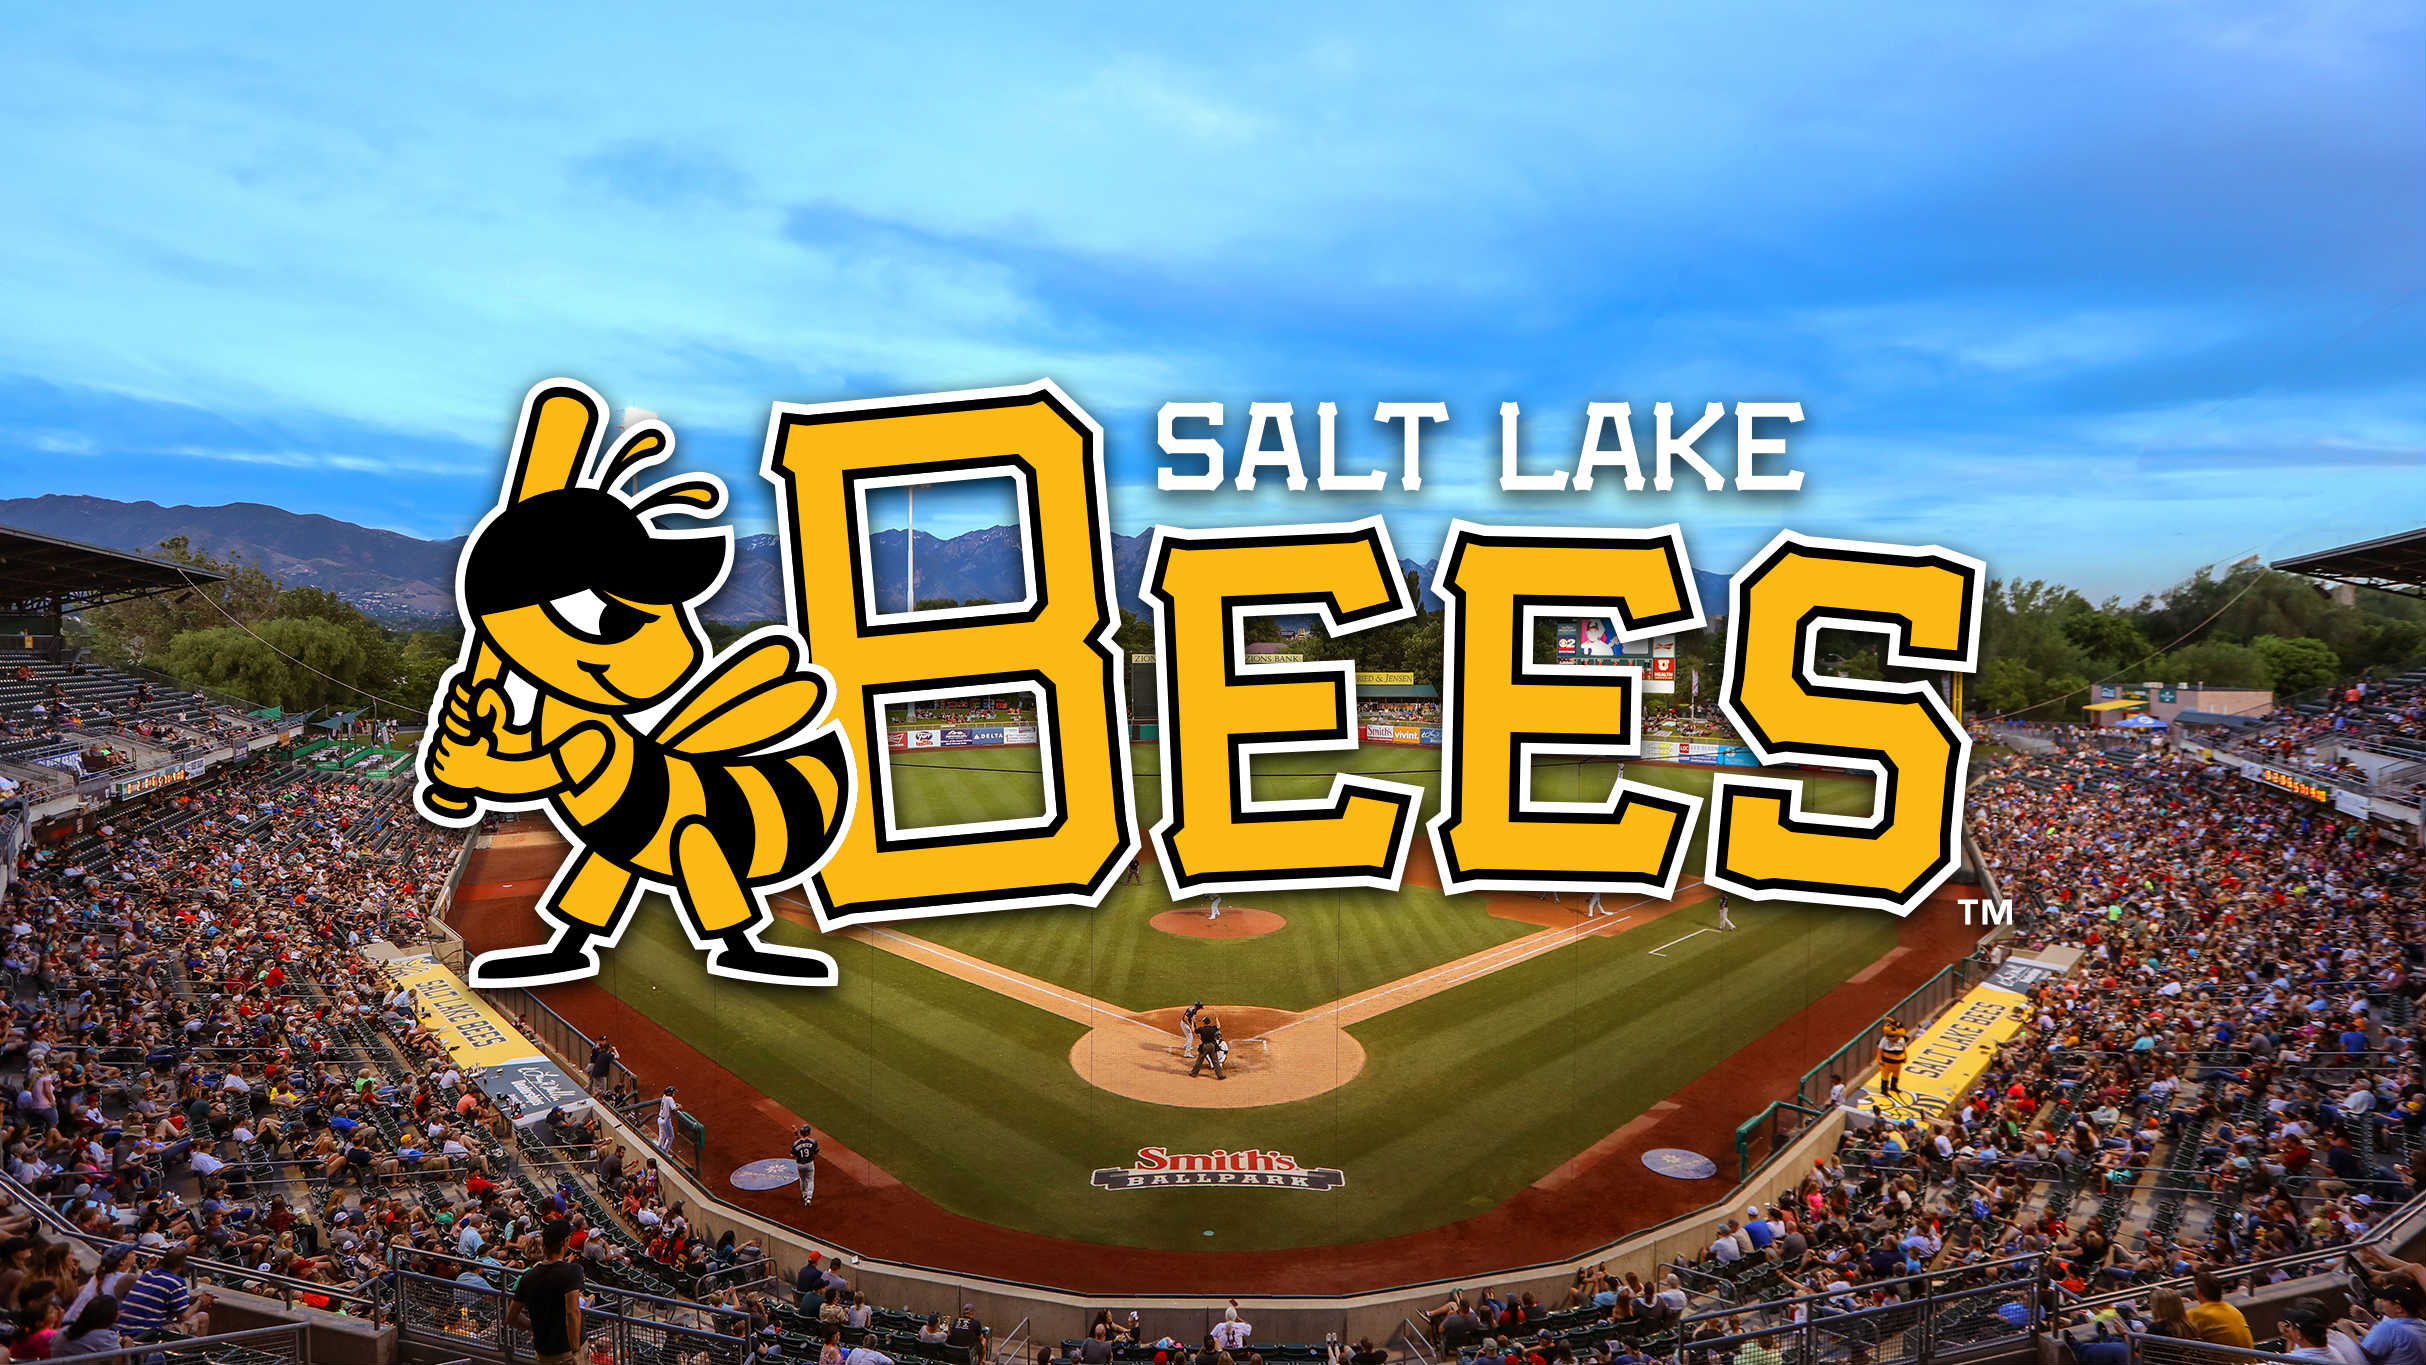 Salt Lake Bees vs. Reno Aces